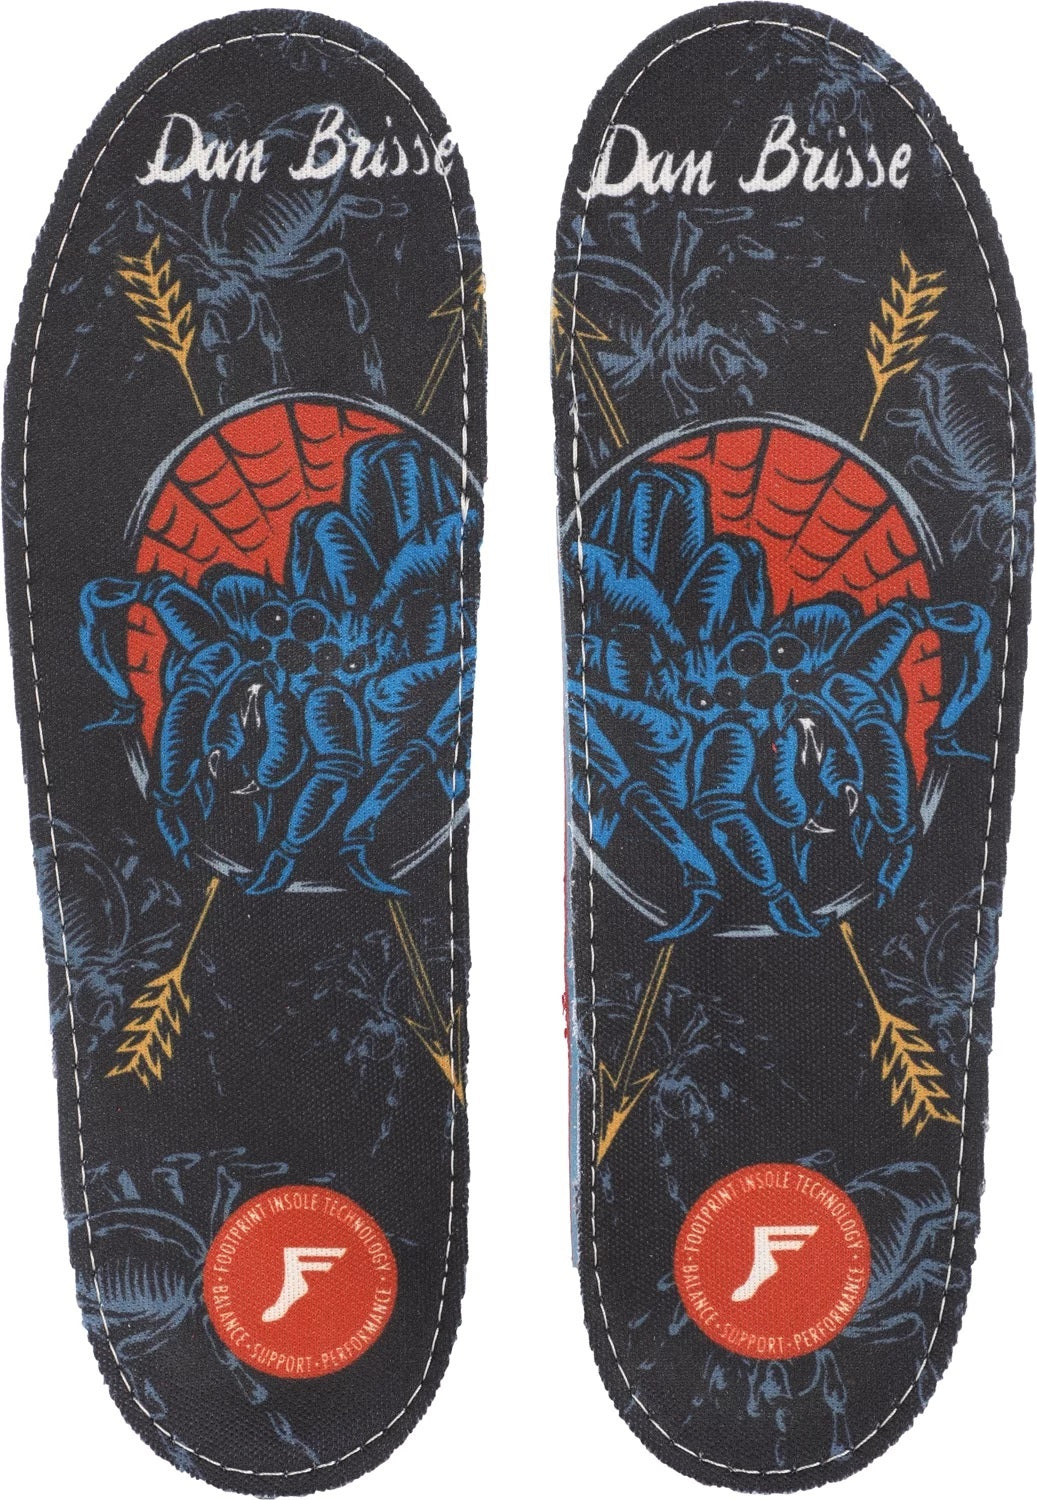 Footprint -  Gamechangers Insoles - Dan Brisse Spider (Size 13/13.5 US)